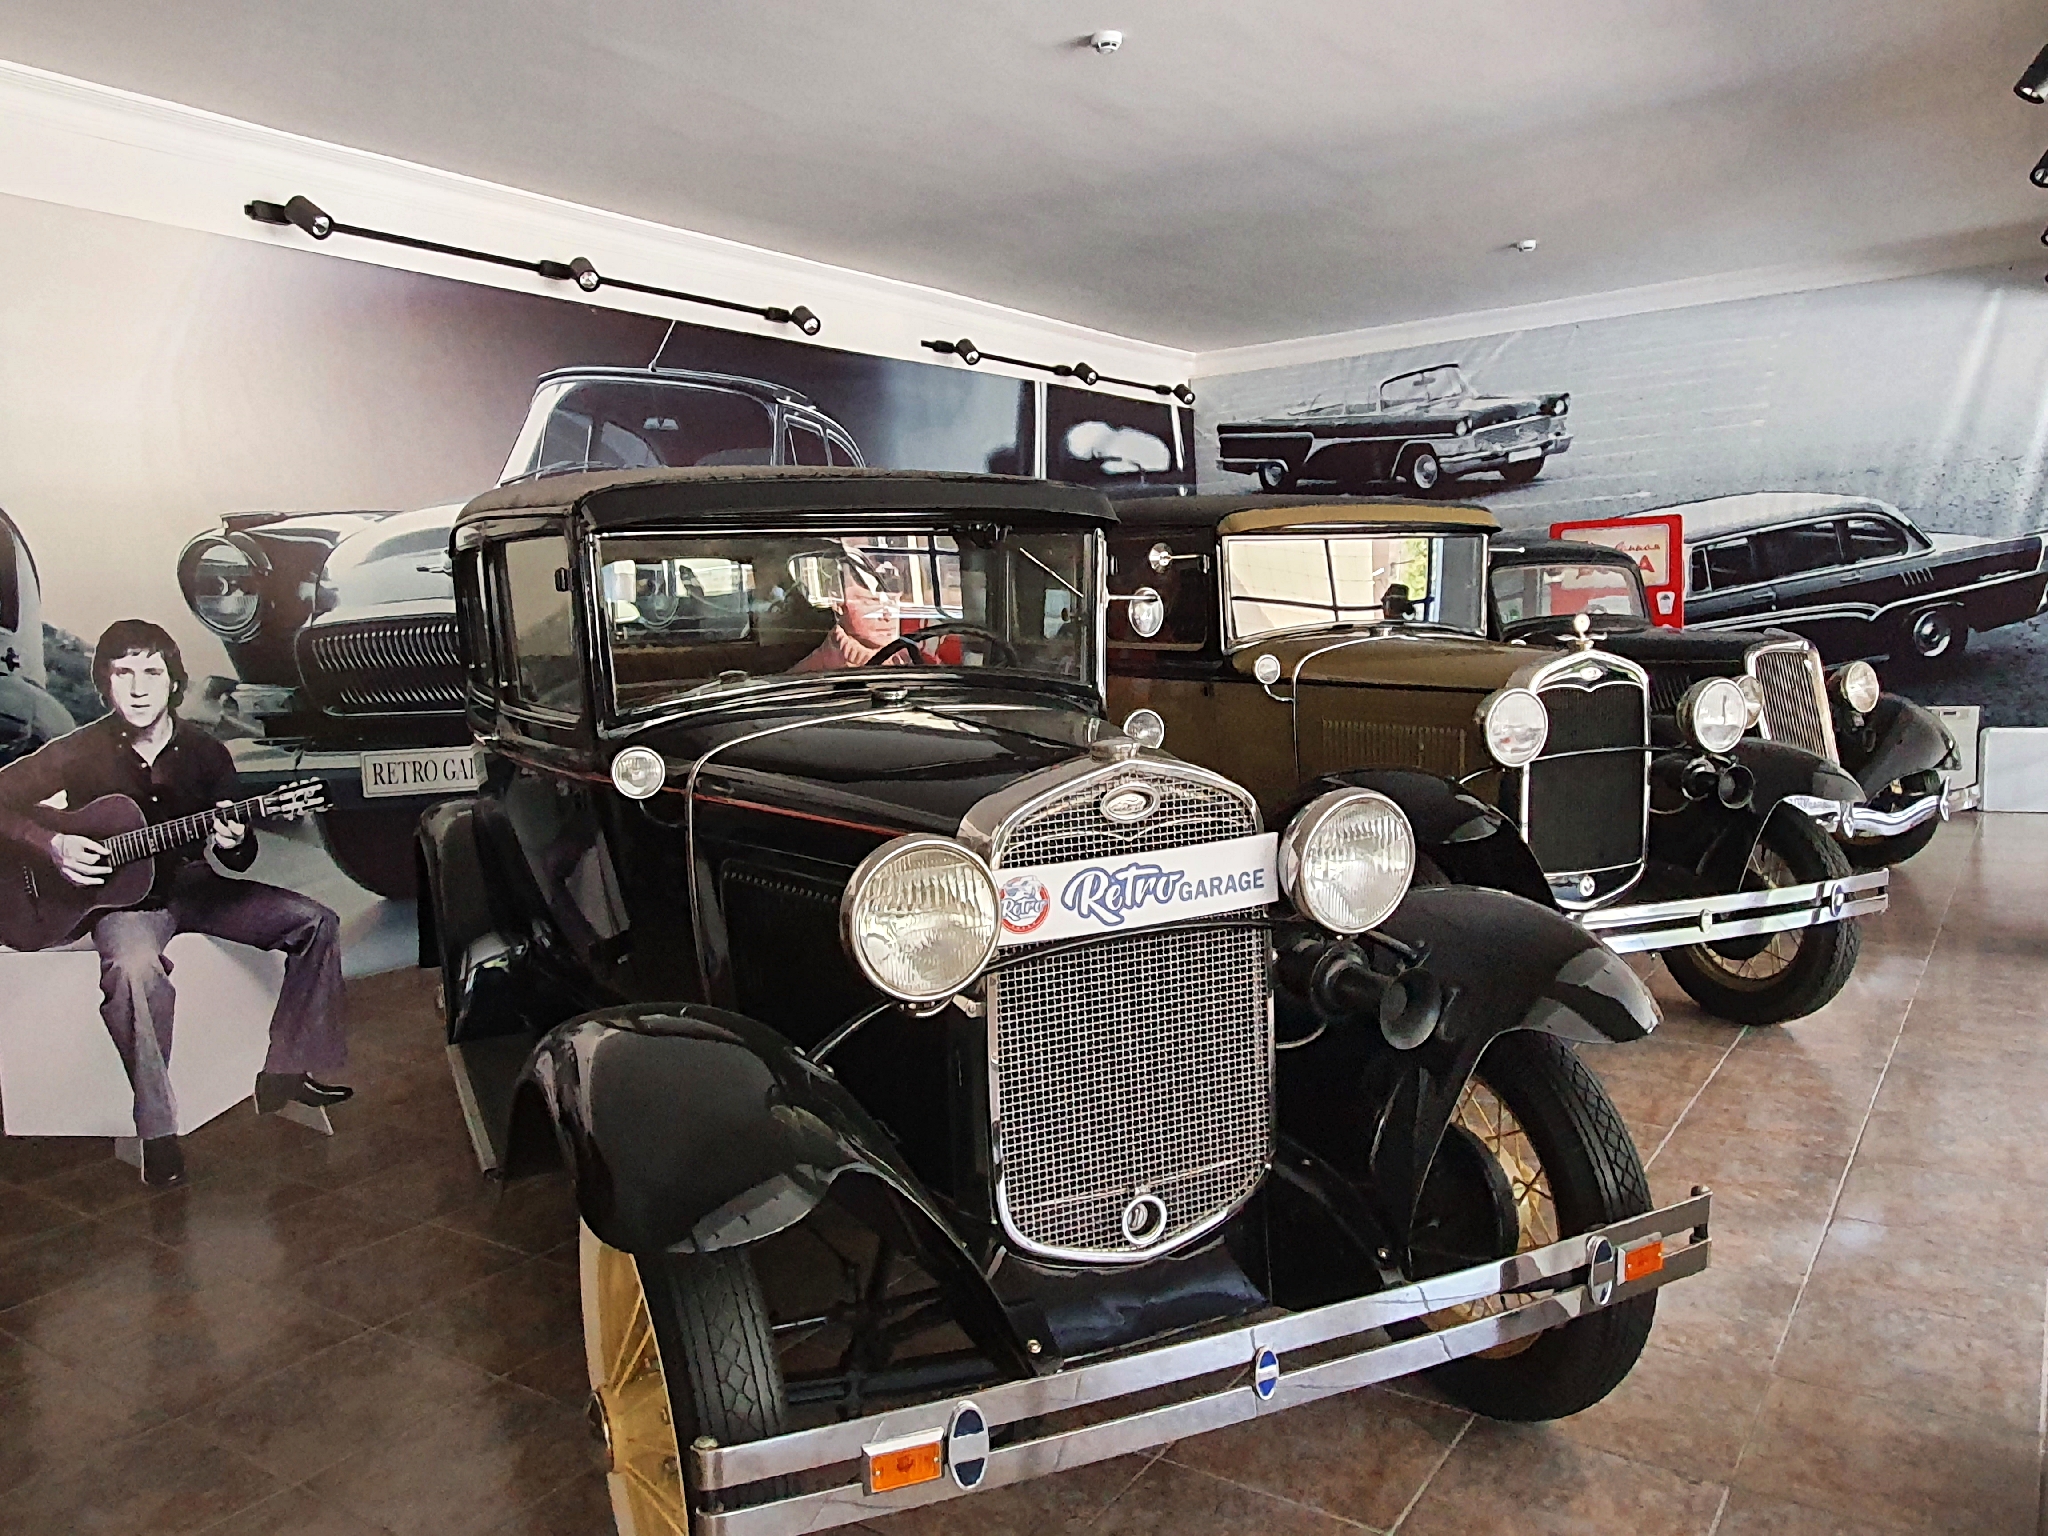 Info Shymkent - "Retro Garage" is named the car museum in Shymkent, Kazakhstan